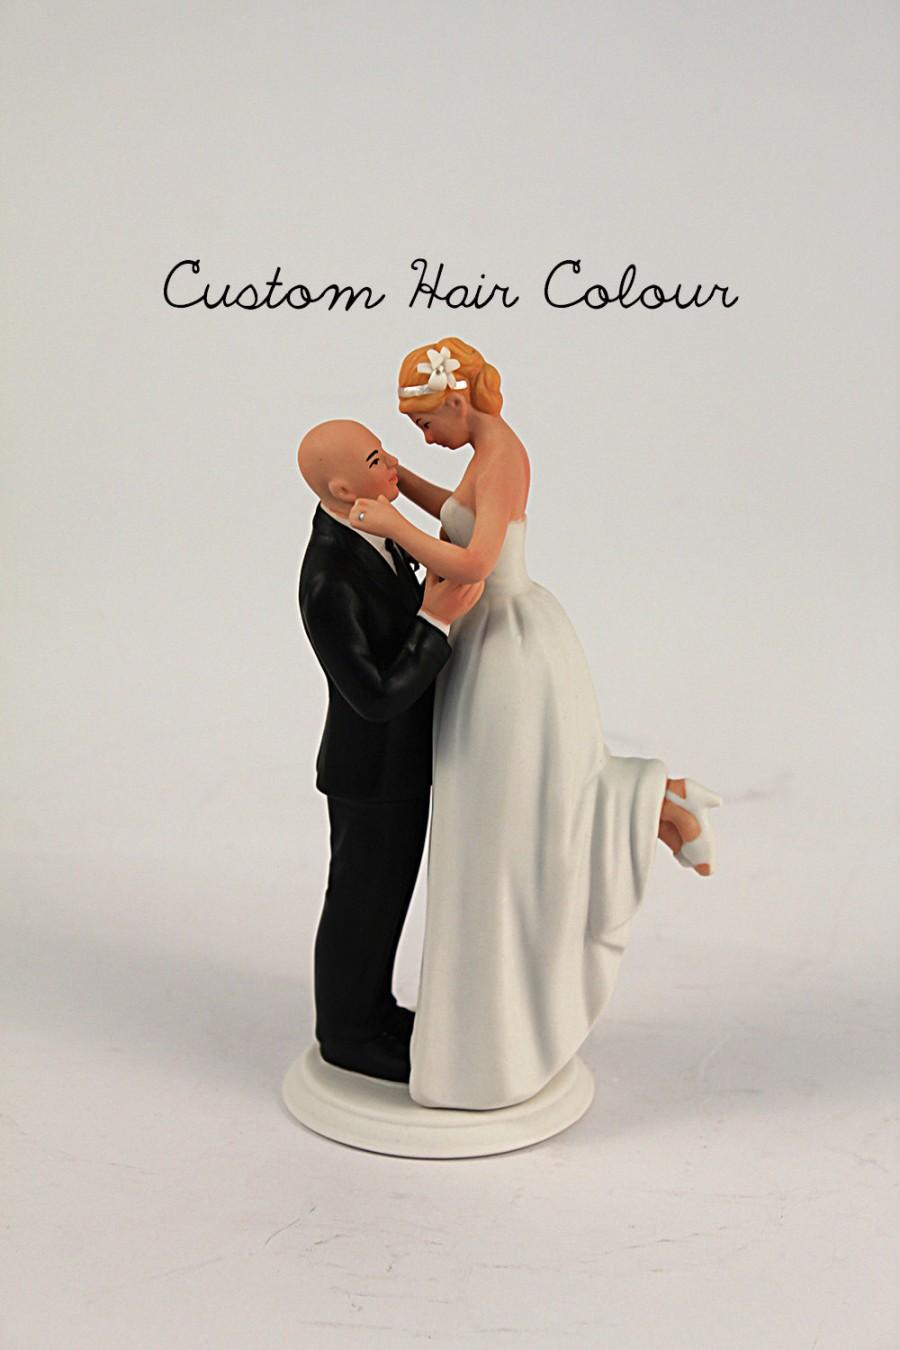 Wedding - True Romance Interlocking Bride and Groom Cake Topper - Medium Skin Tone Bald Groom and Light Skin Tone Bride - Personalized Wedding Toppers